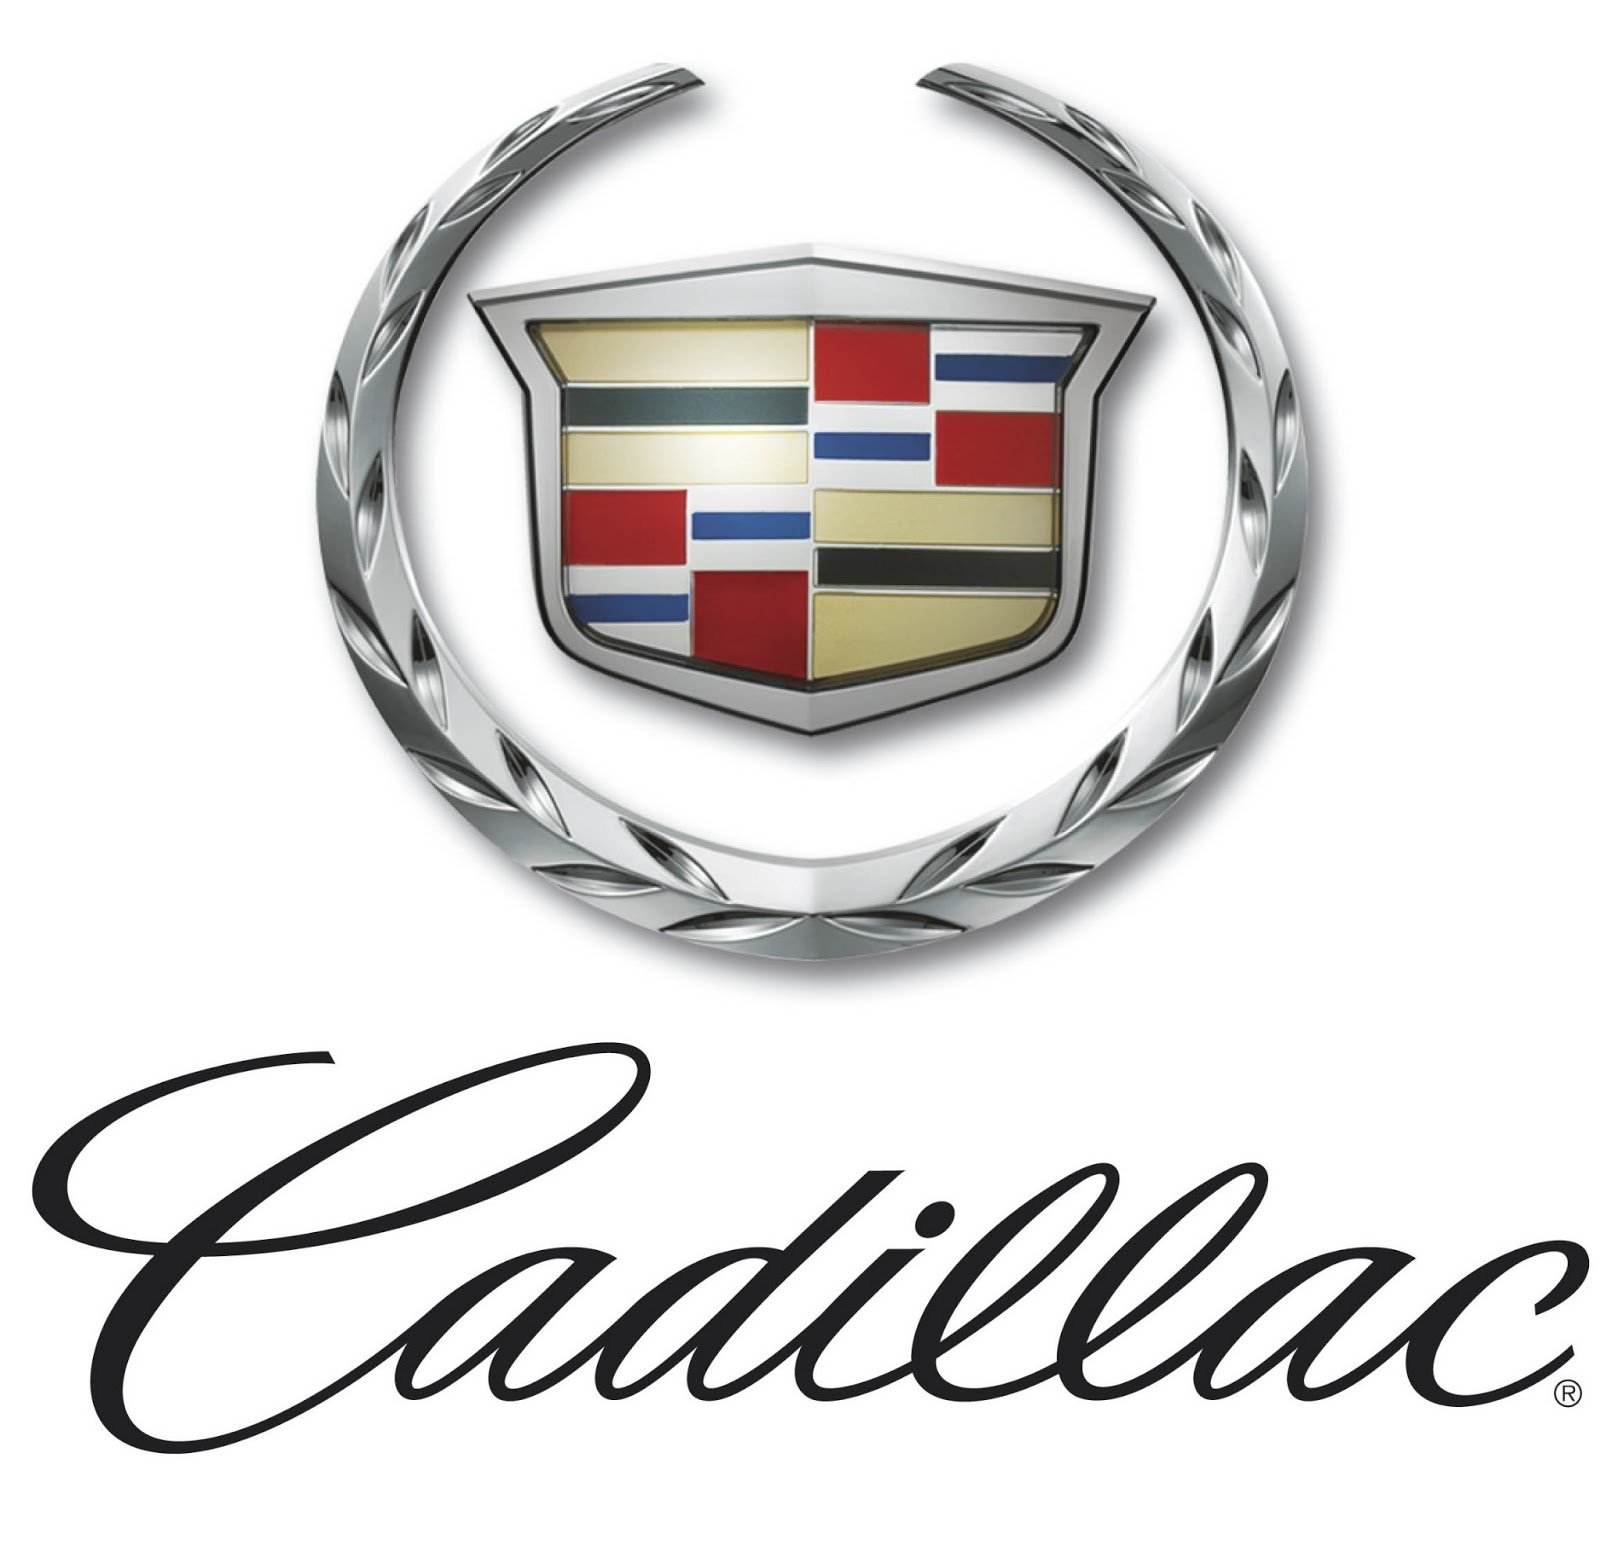  logo wallpapercadillac logo pngcadillac logo imagescadillac logo